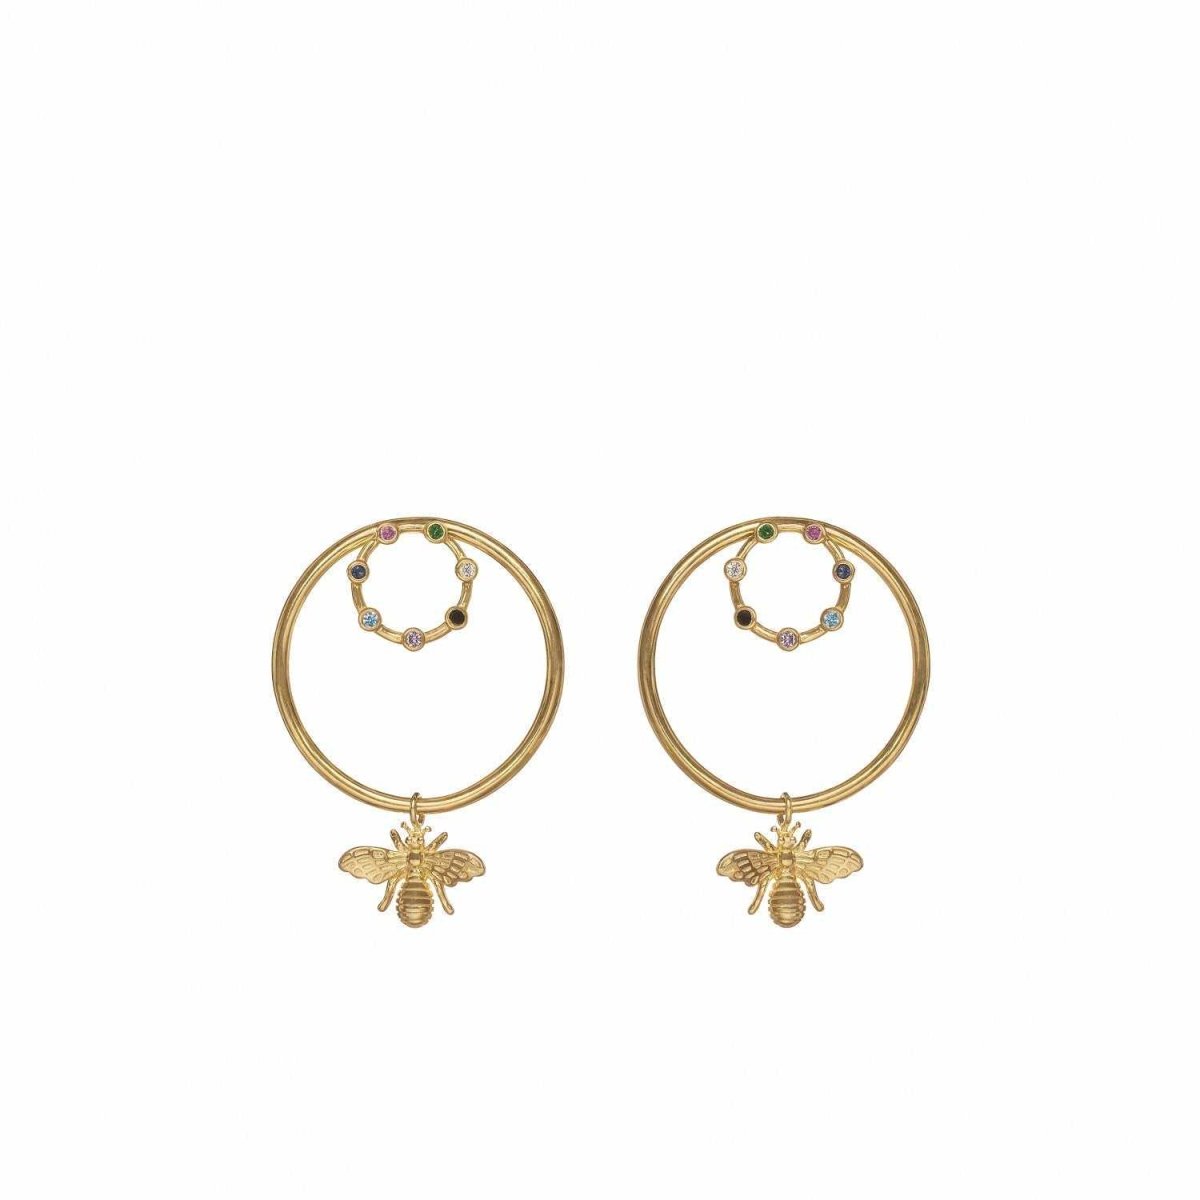 Earrings - Hoop earrings with double hoop pendants with insect charm design